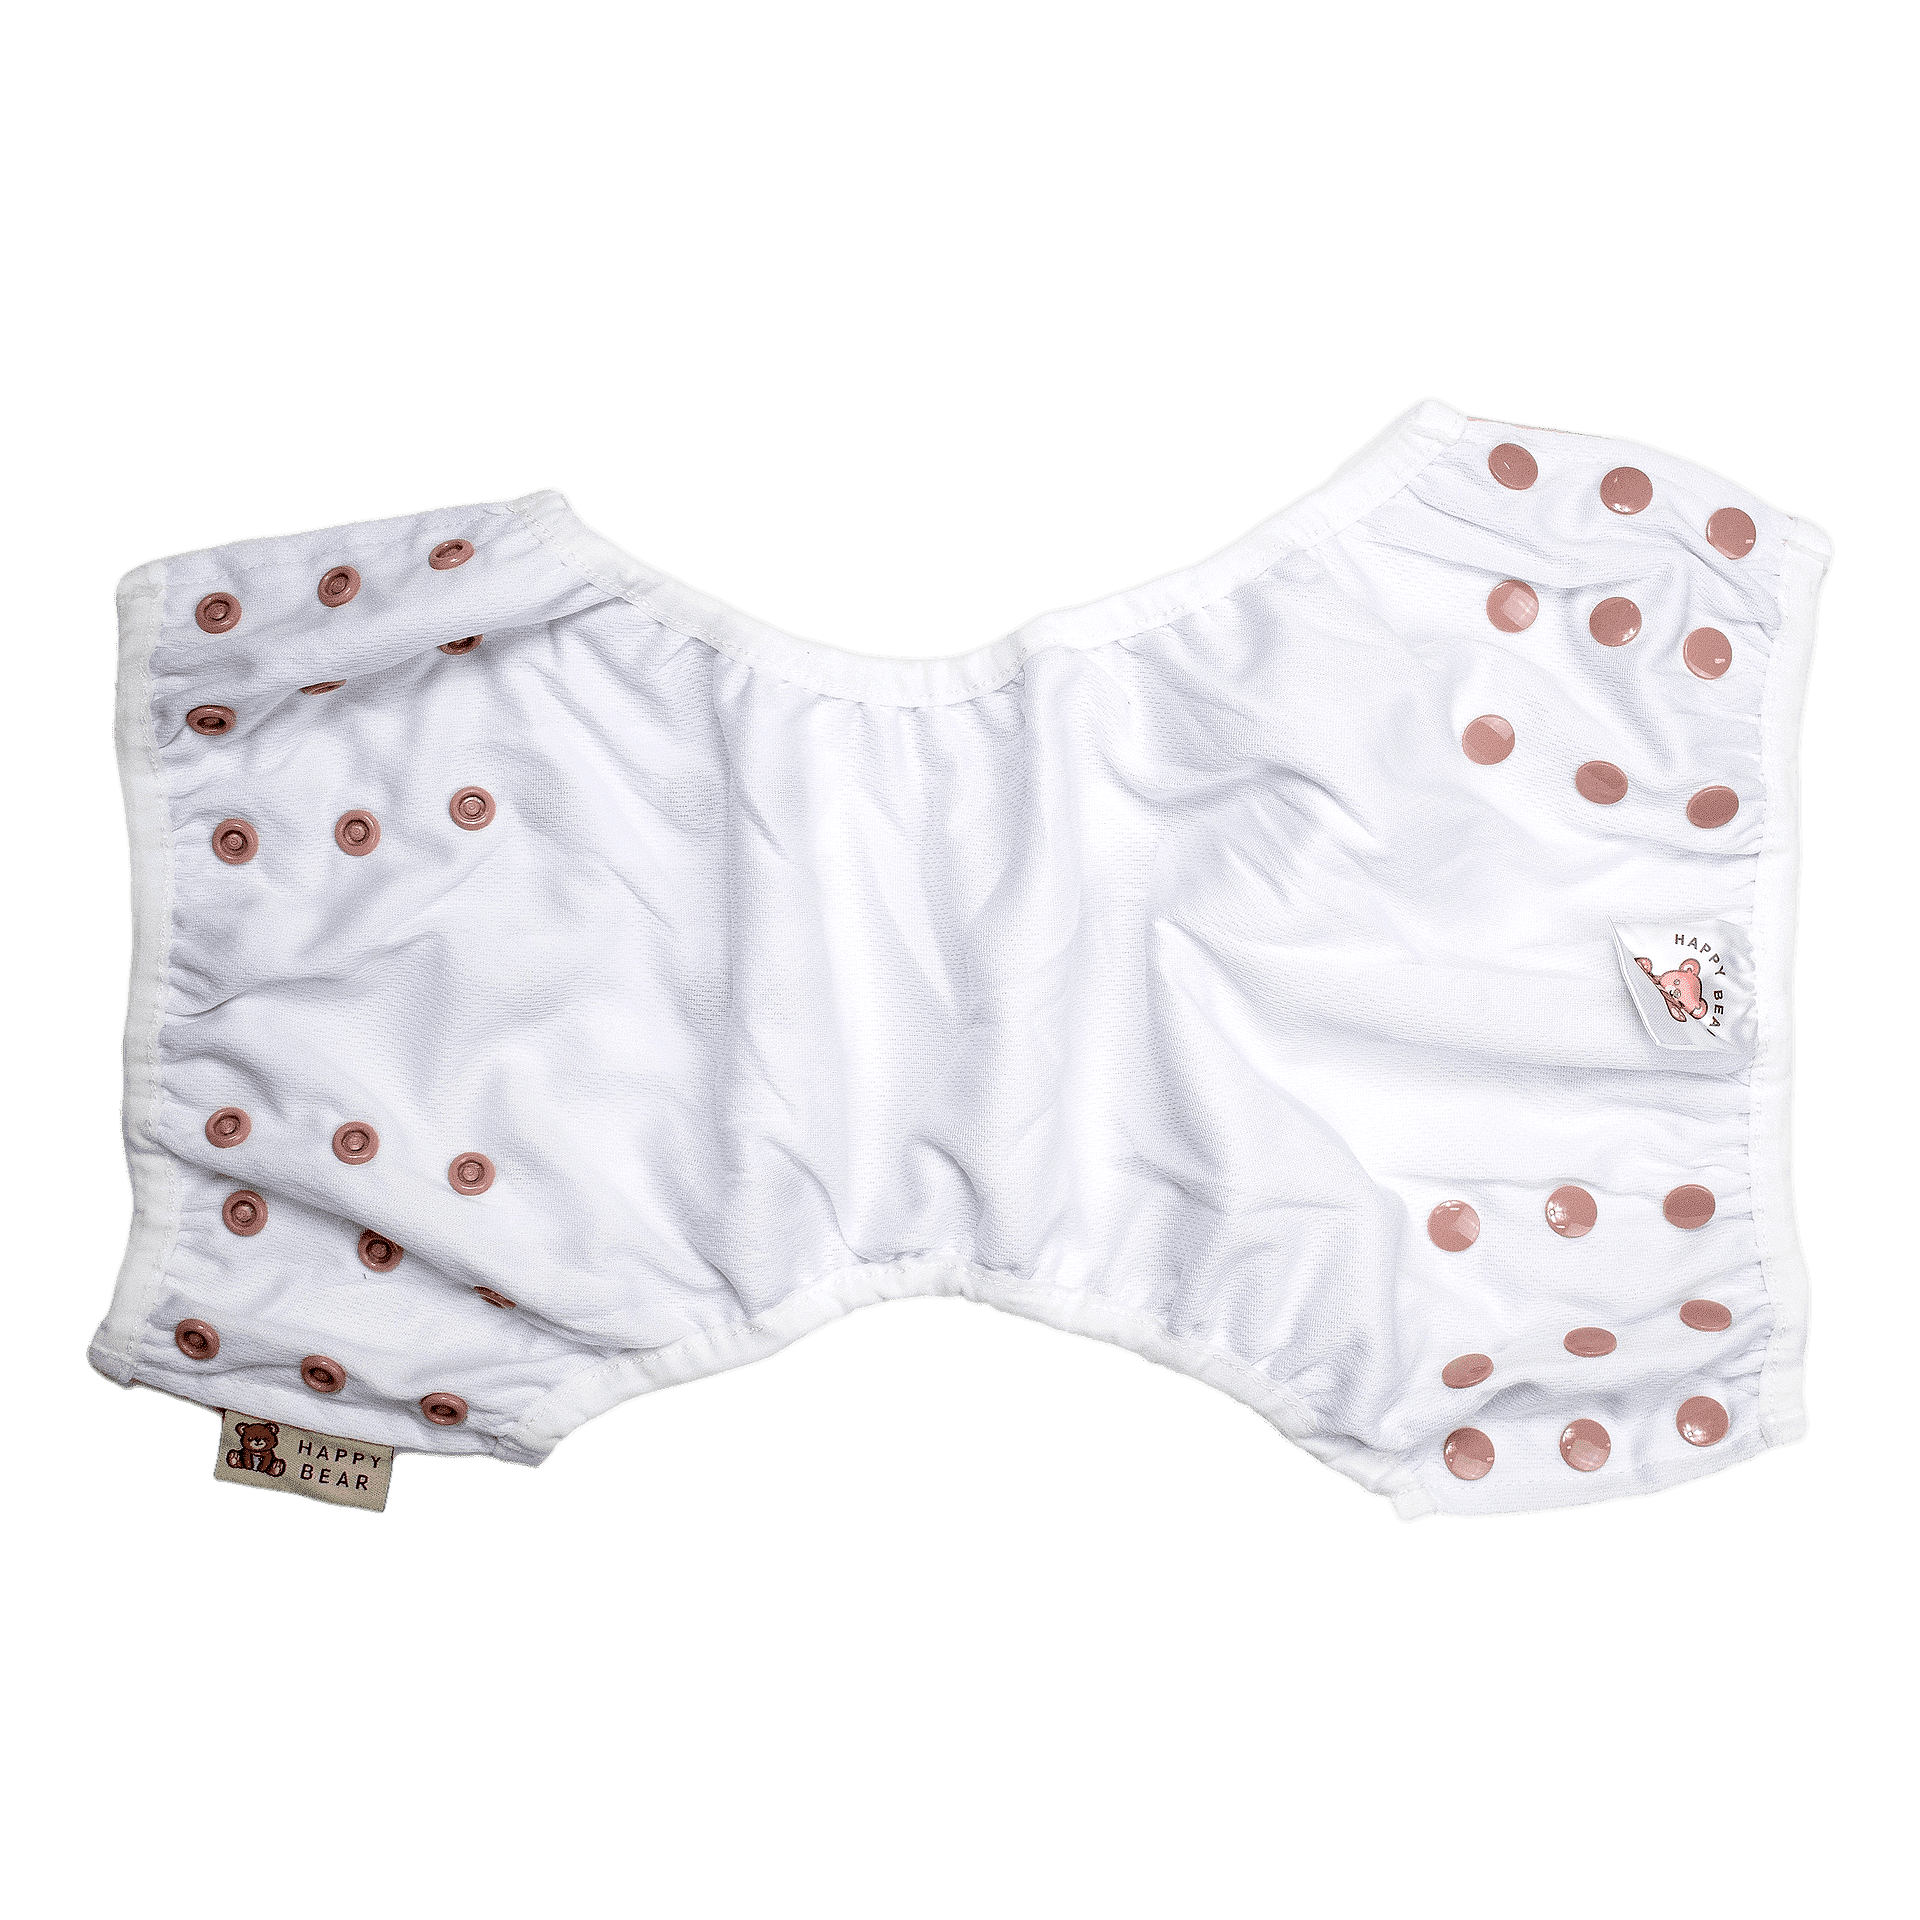 HappyBear Бебешки памперс бански за многократна употреба Roar